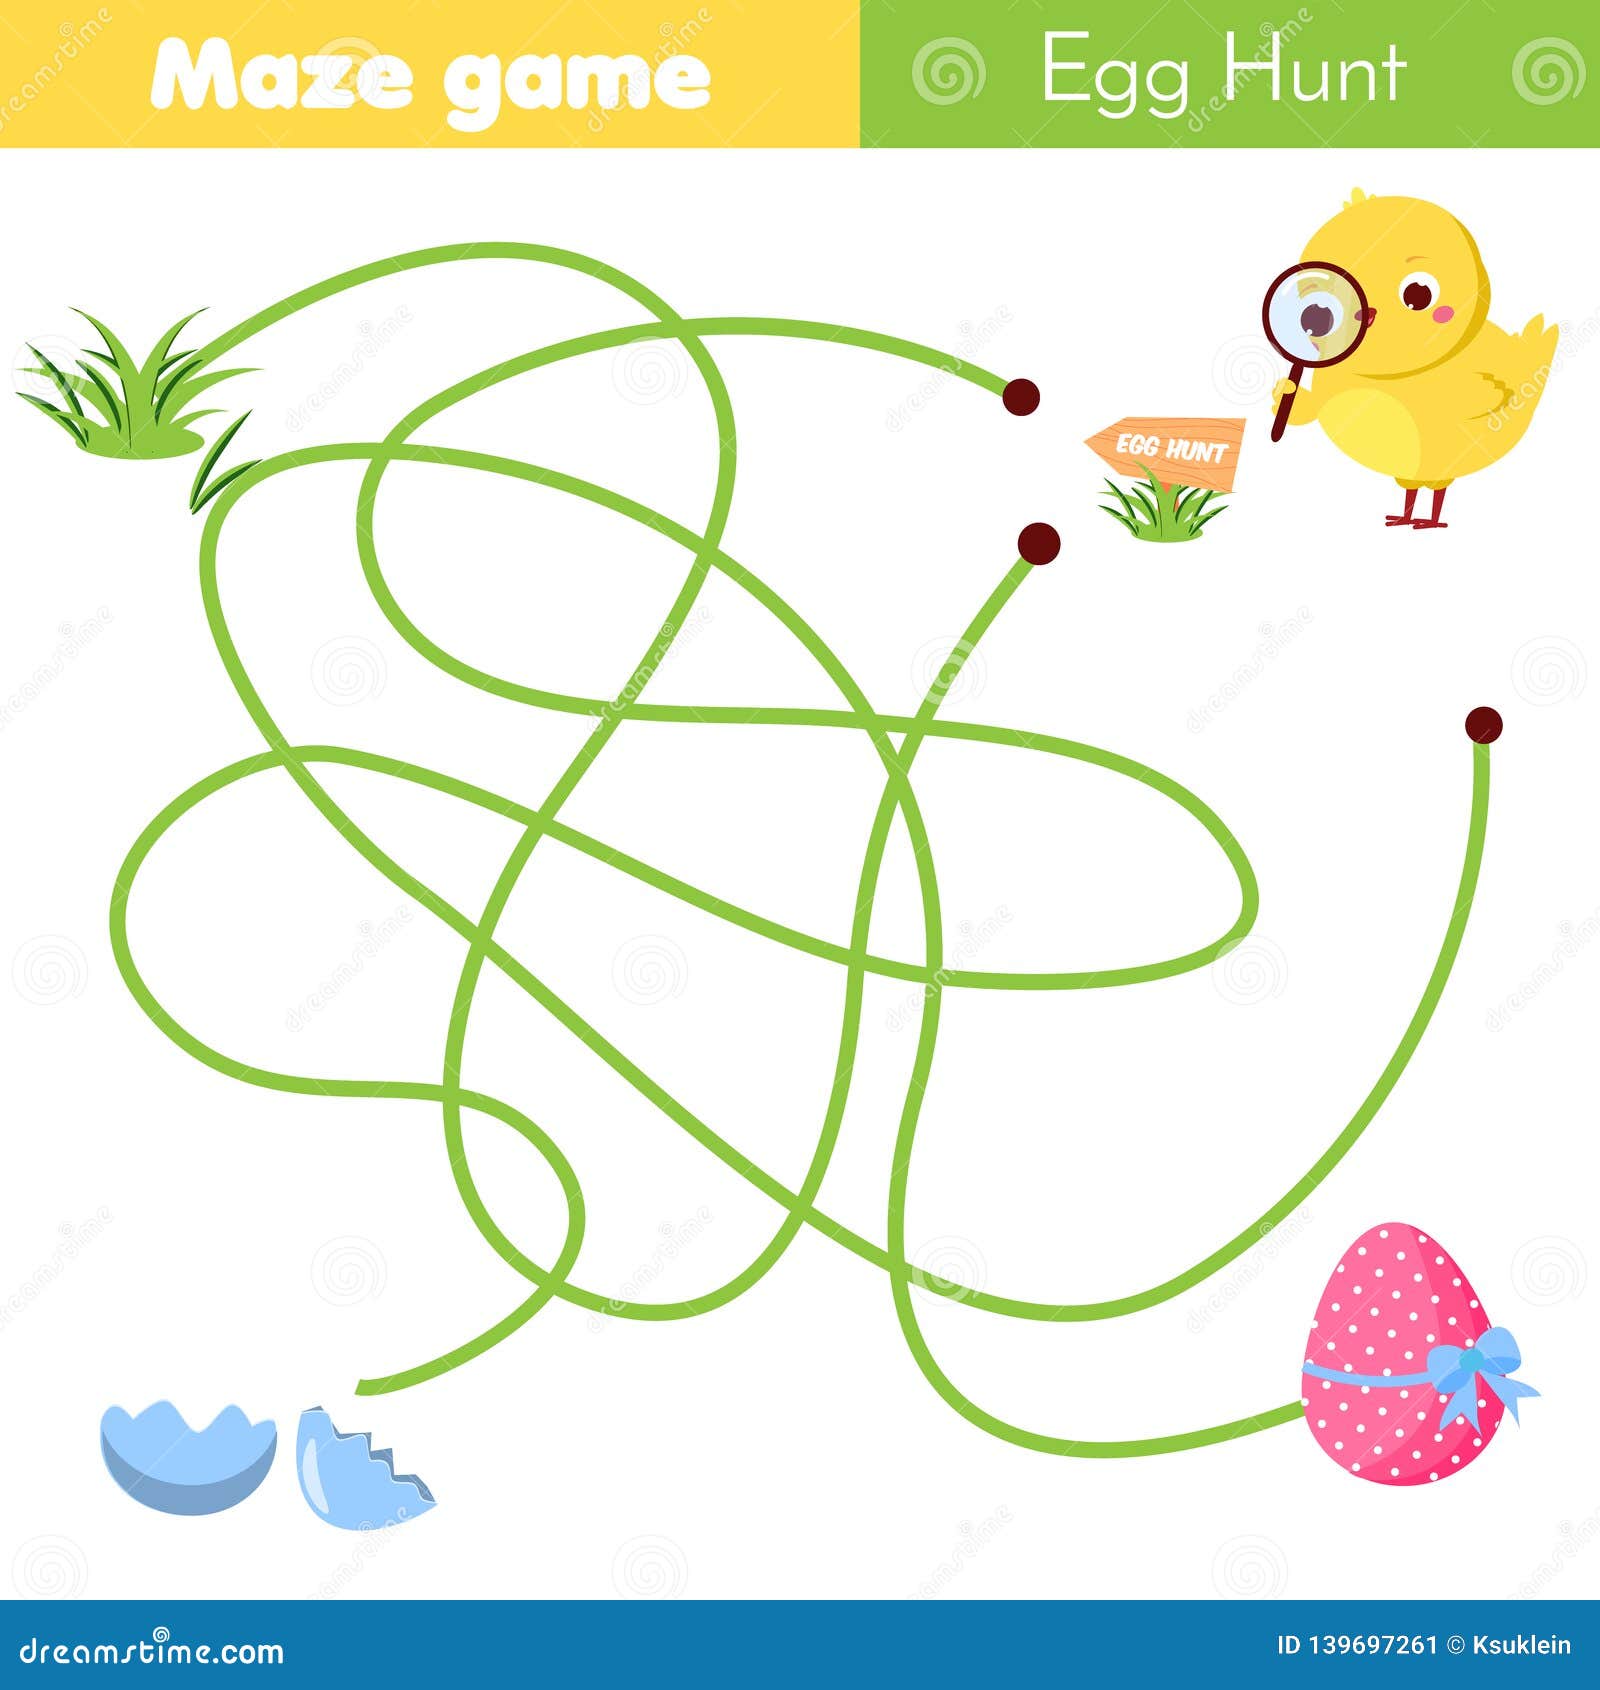 Maze Game For Children Easter Egg Hunt Activity Help Chicken Find Way To Egg Stock Vector Illustration Of Hunt Preschool